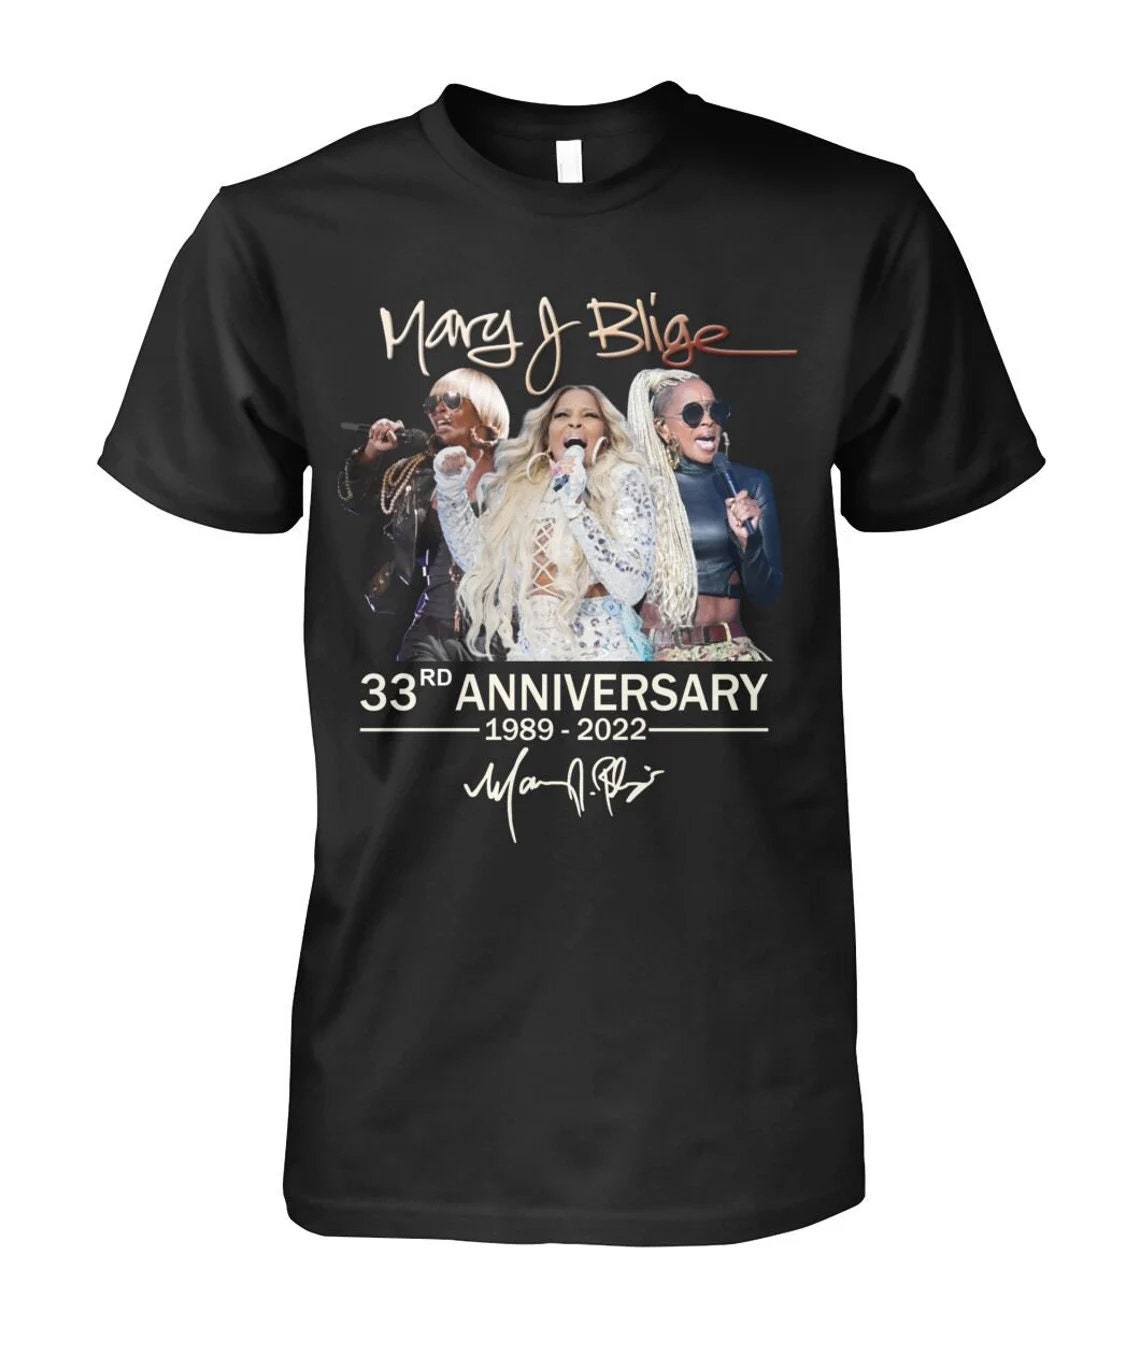 Mary J Blige 30rd Anniversary 1989 2022 Signature Unisex T-Shirt